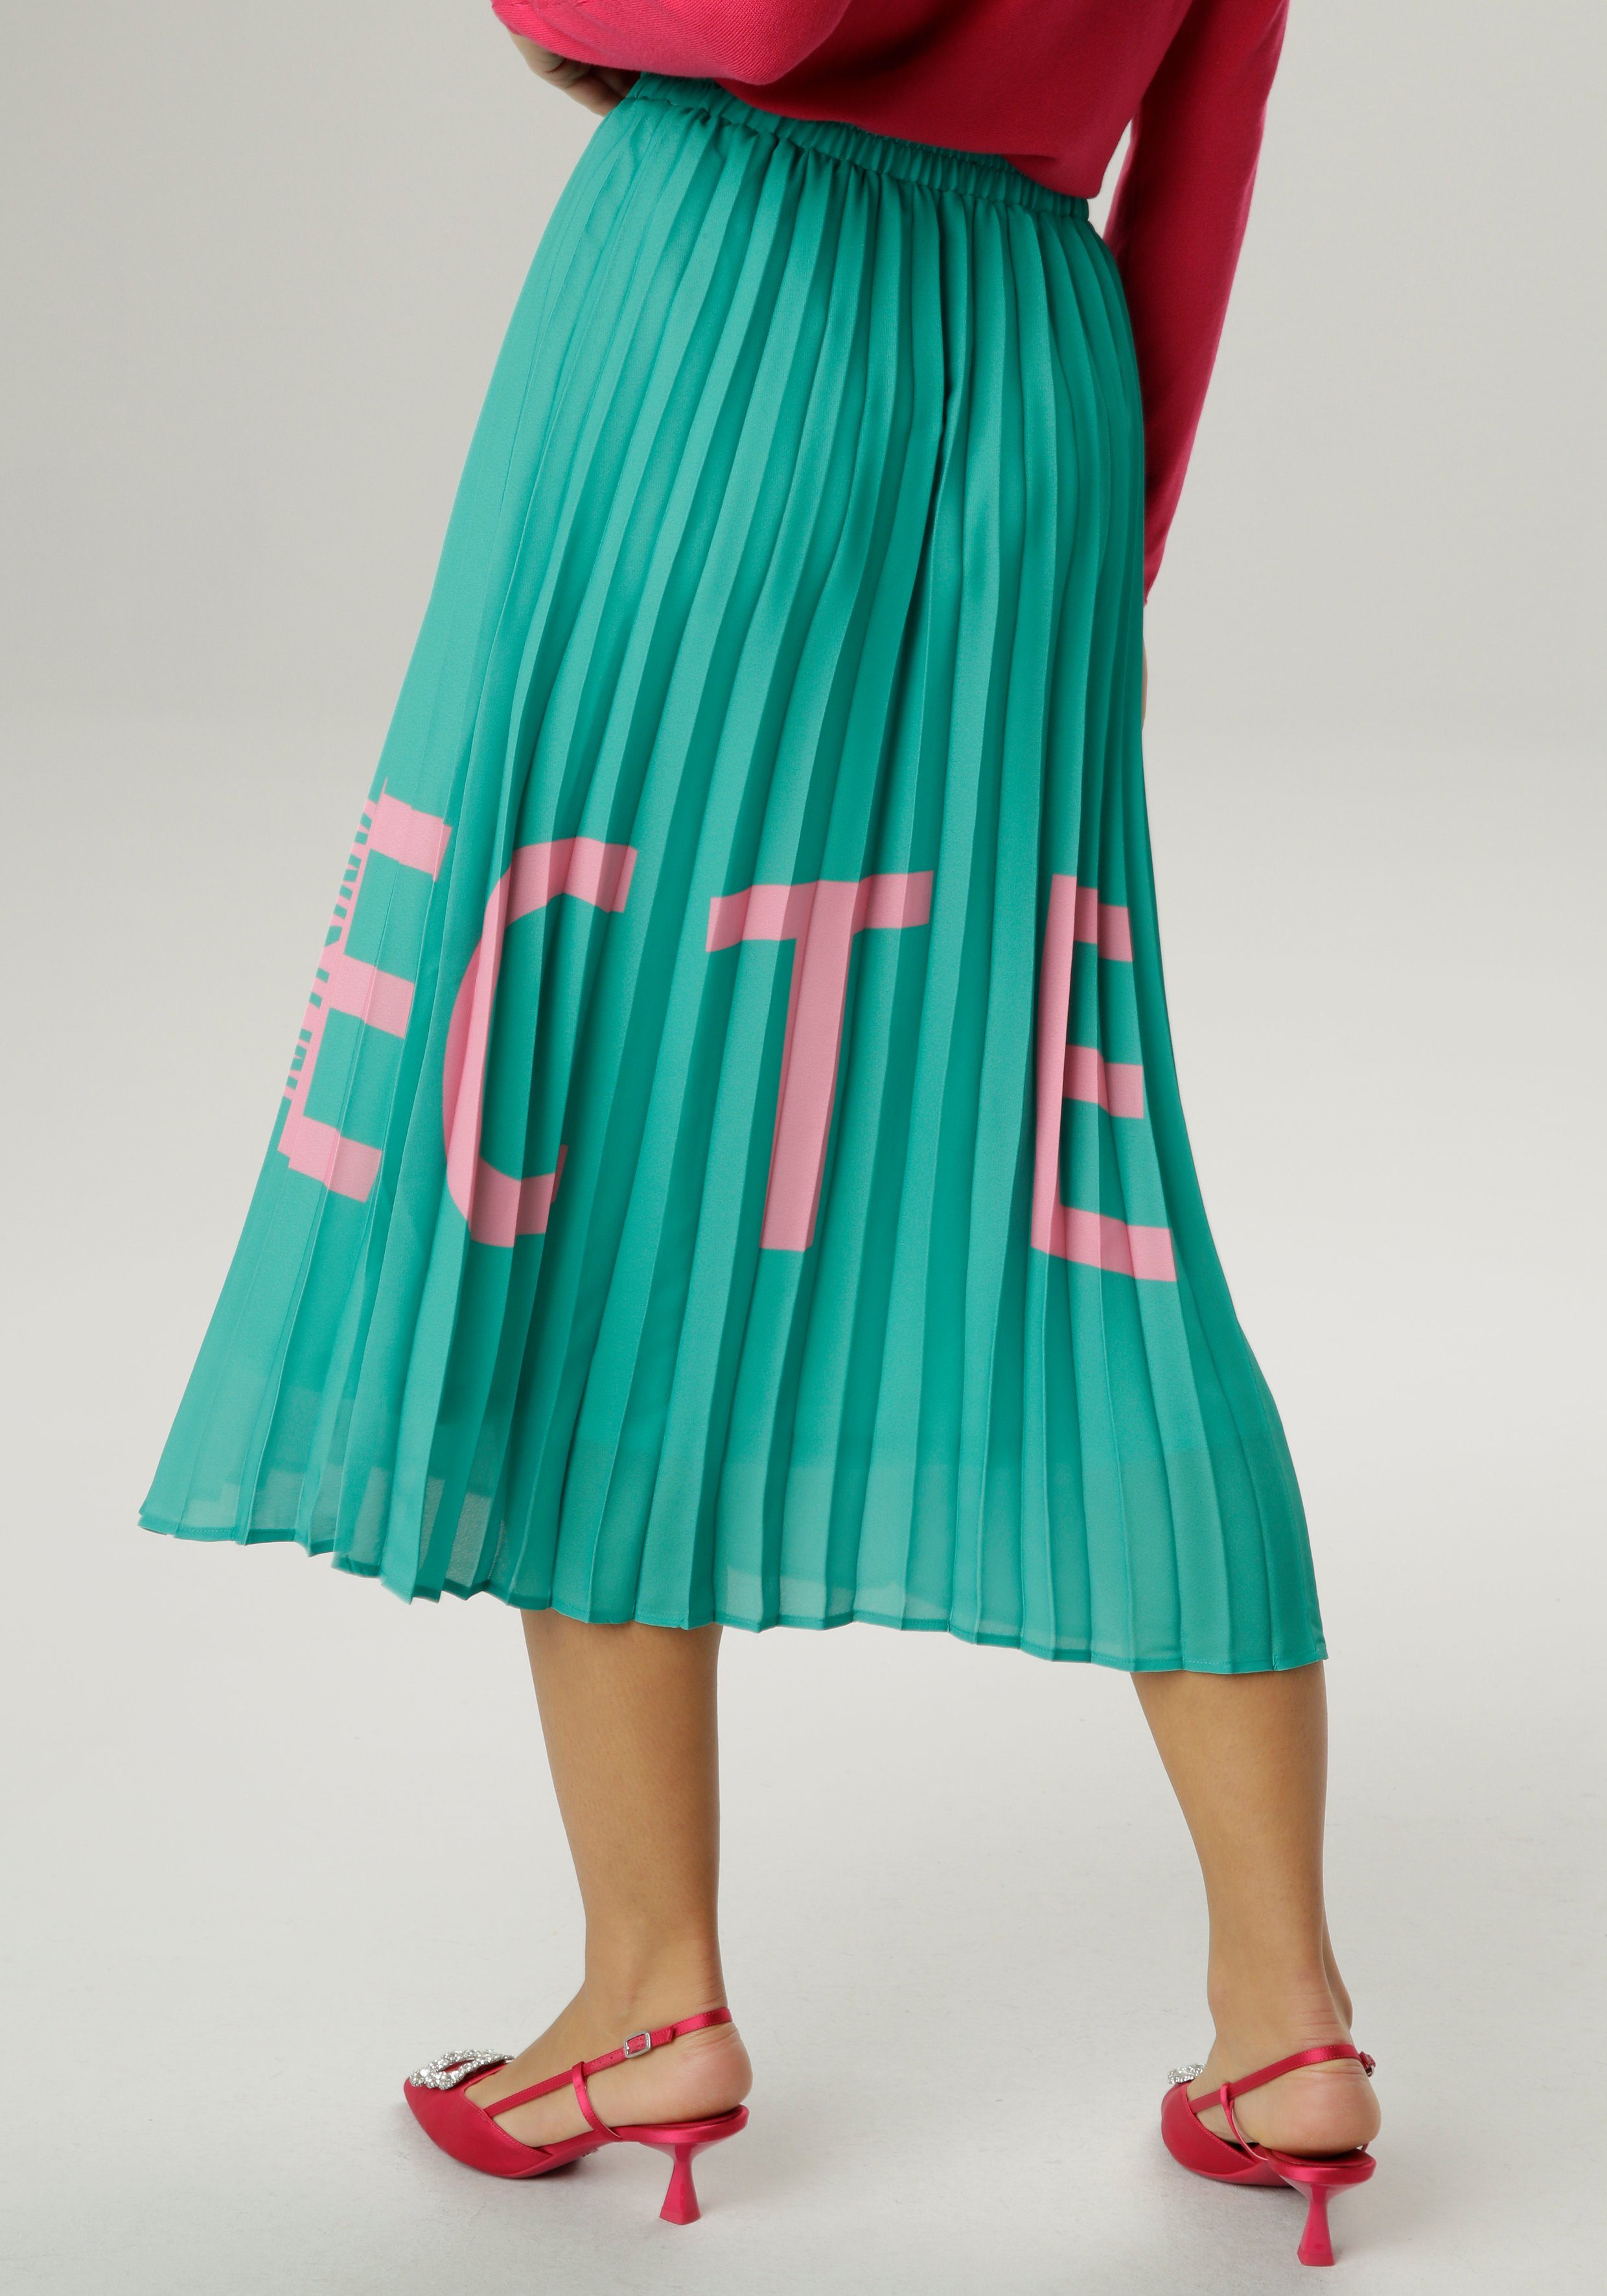 Aniston SELECTED Plisseerock mit Markenschriftzug grün-pink in Knallfarbe